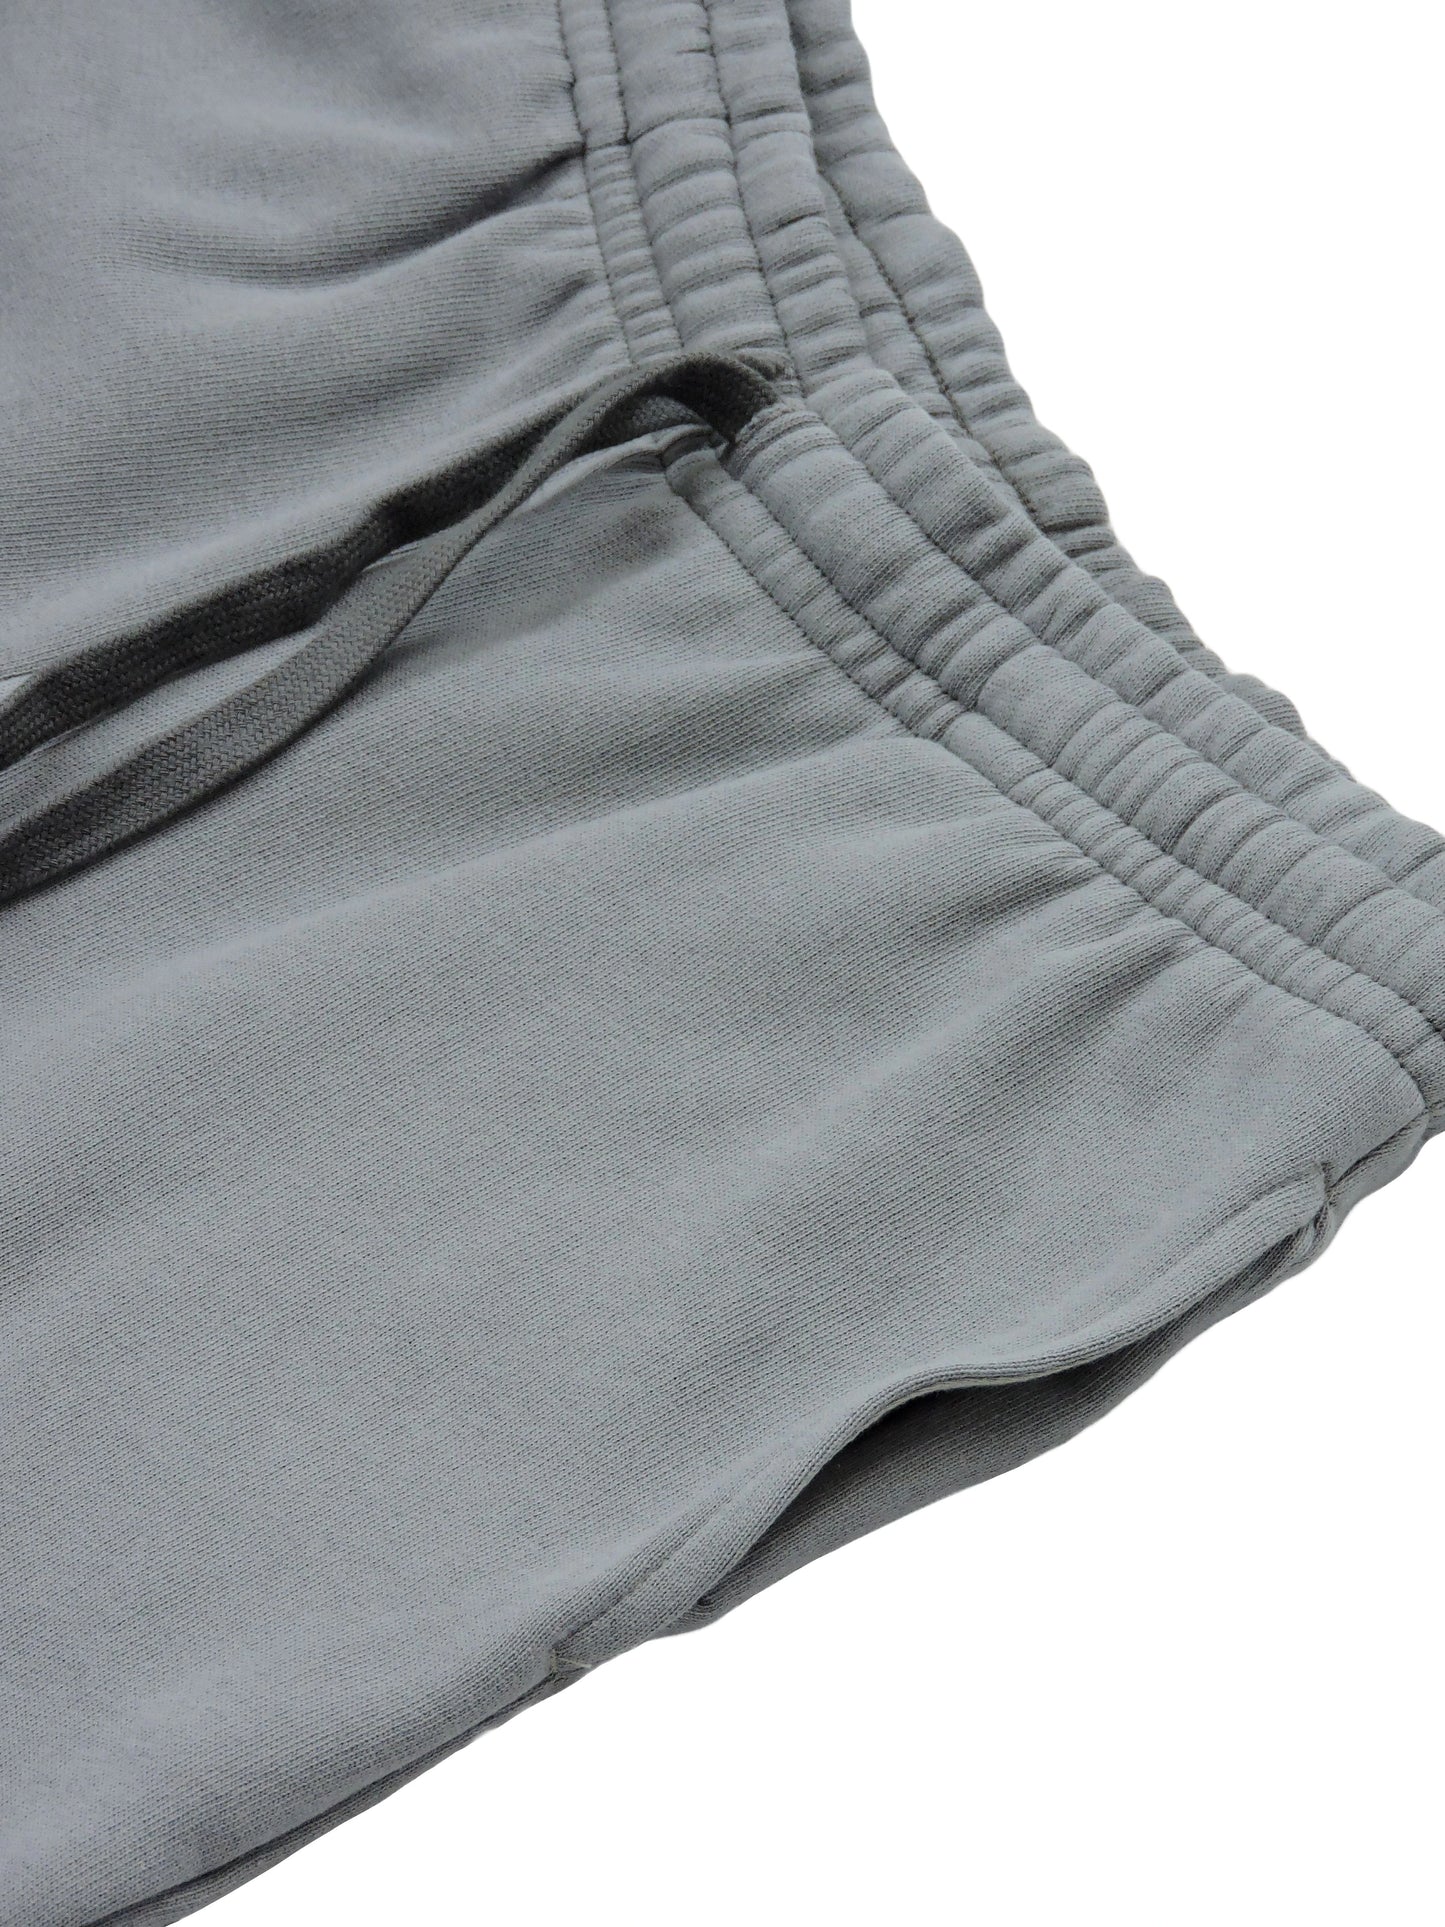 Side Pockets and Drawstrings of Pebble Grey Longshorts